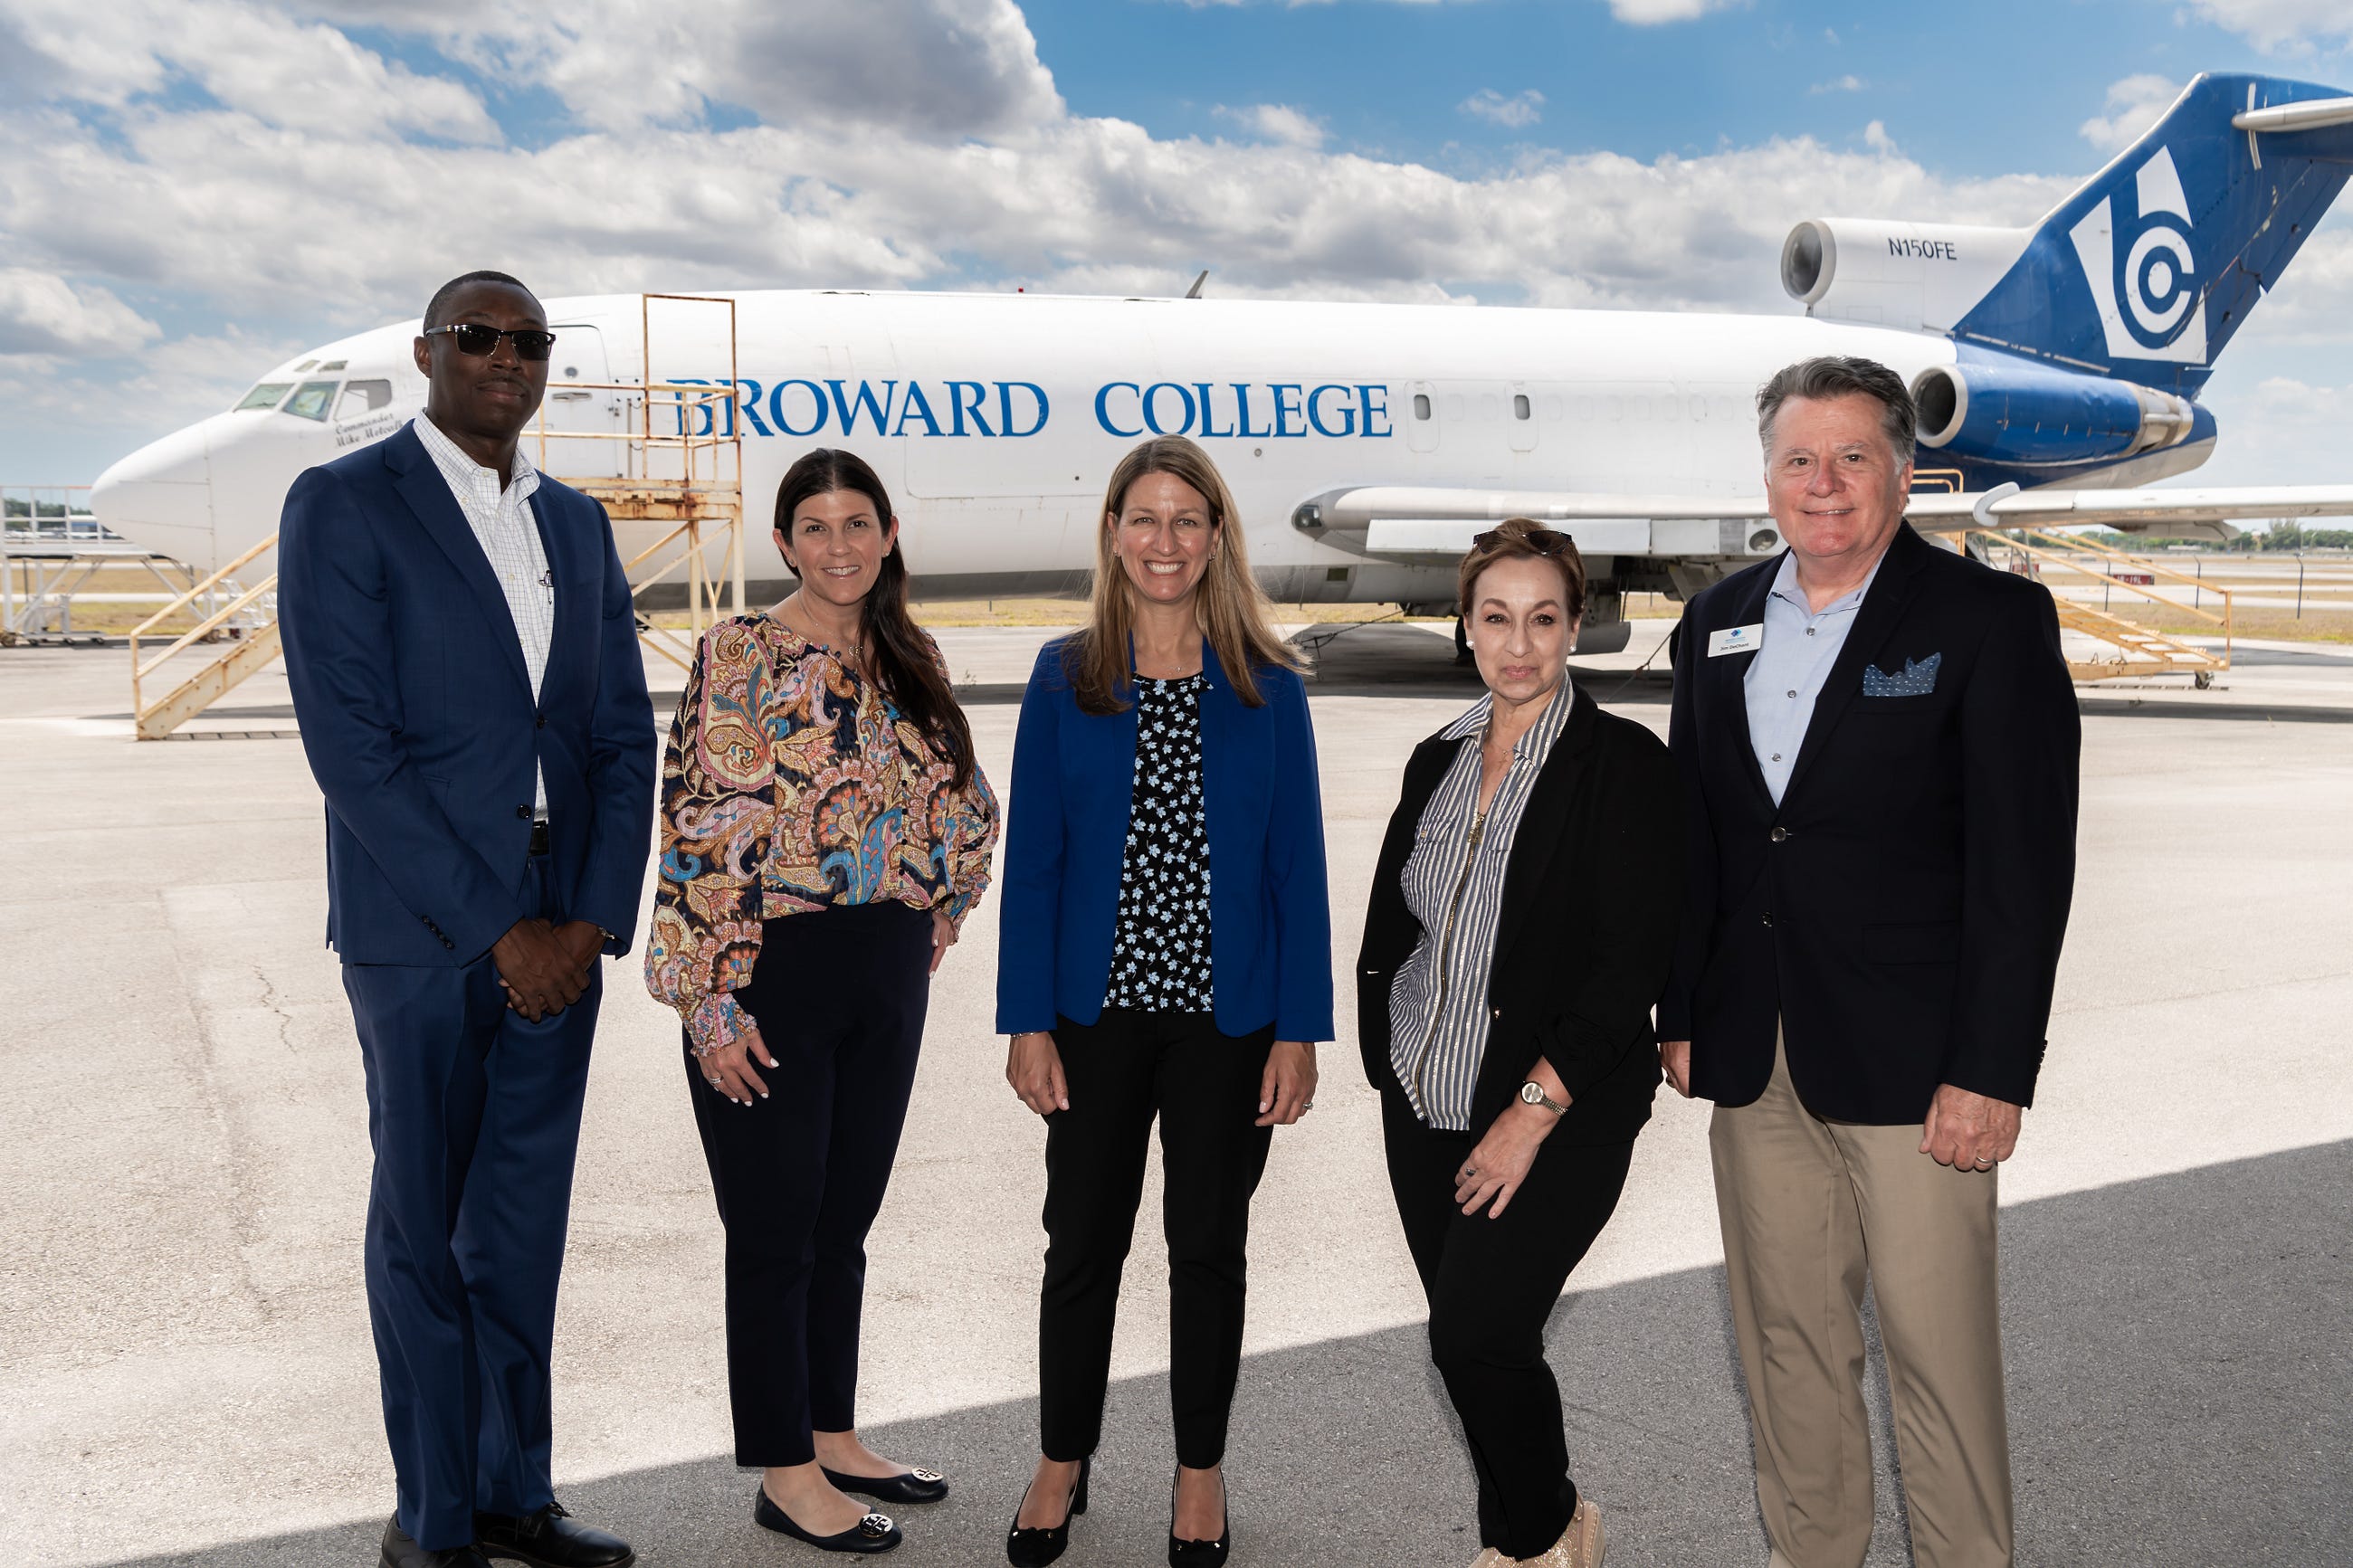 Broward College Aviation Program Celebrates Joining JetBlue’s Gateway